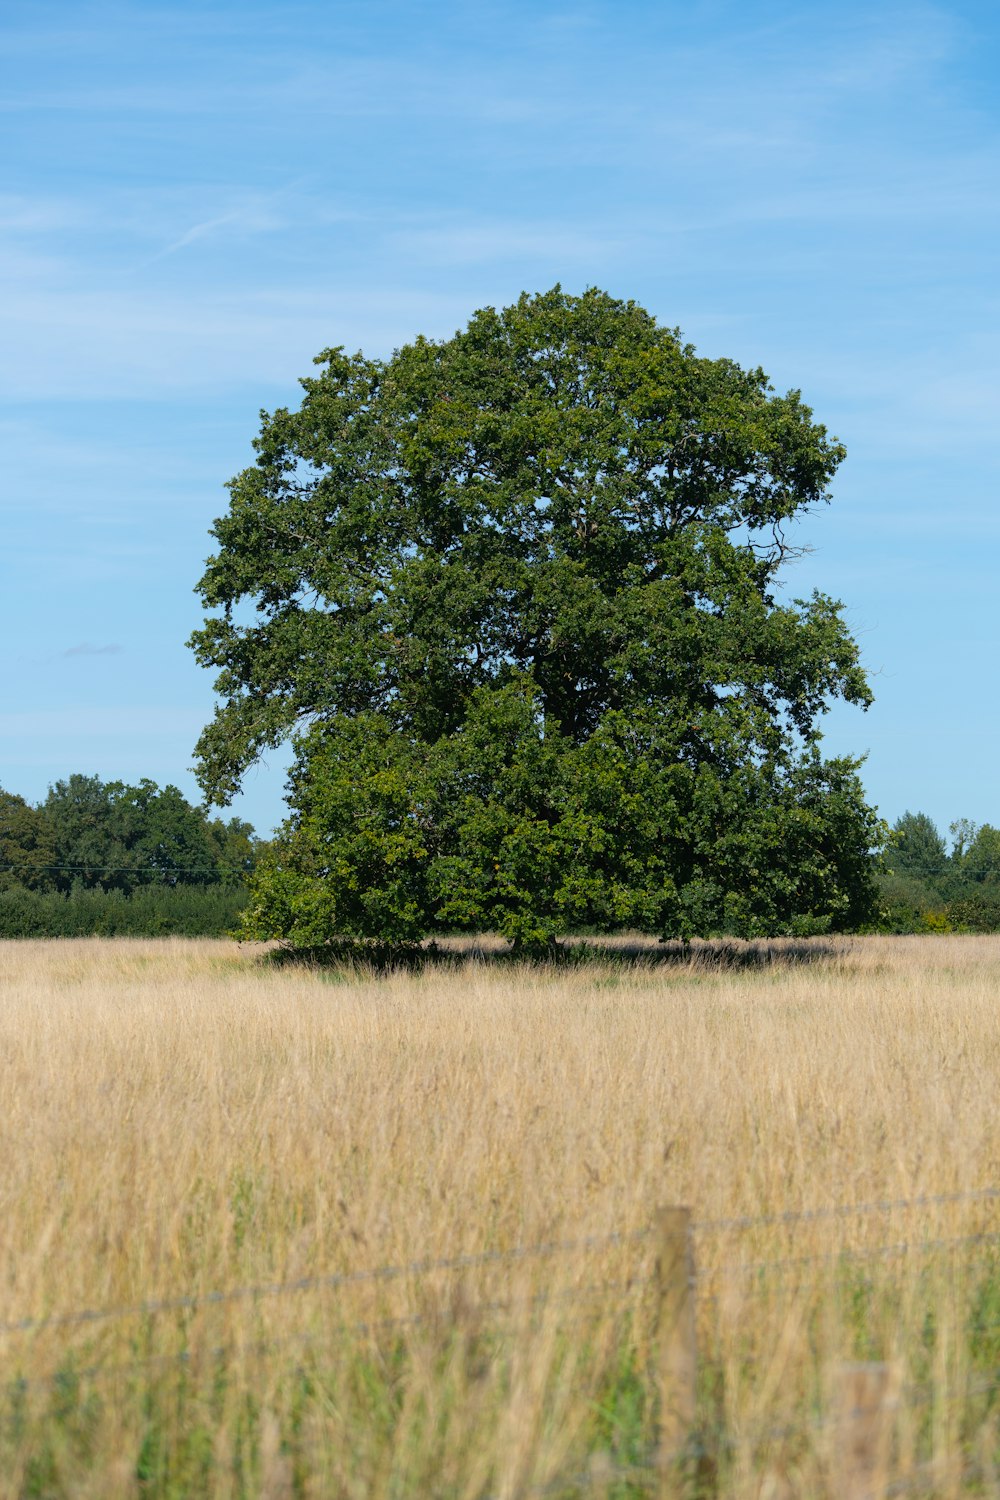 a lone tree in a field of tall grass